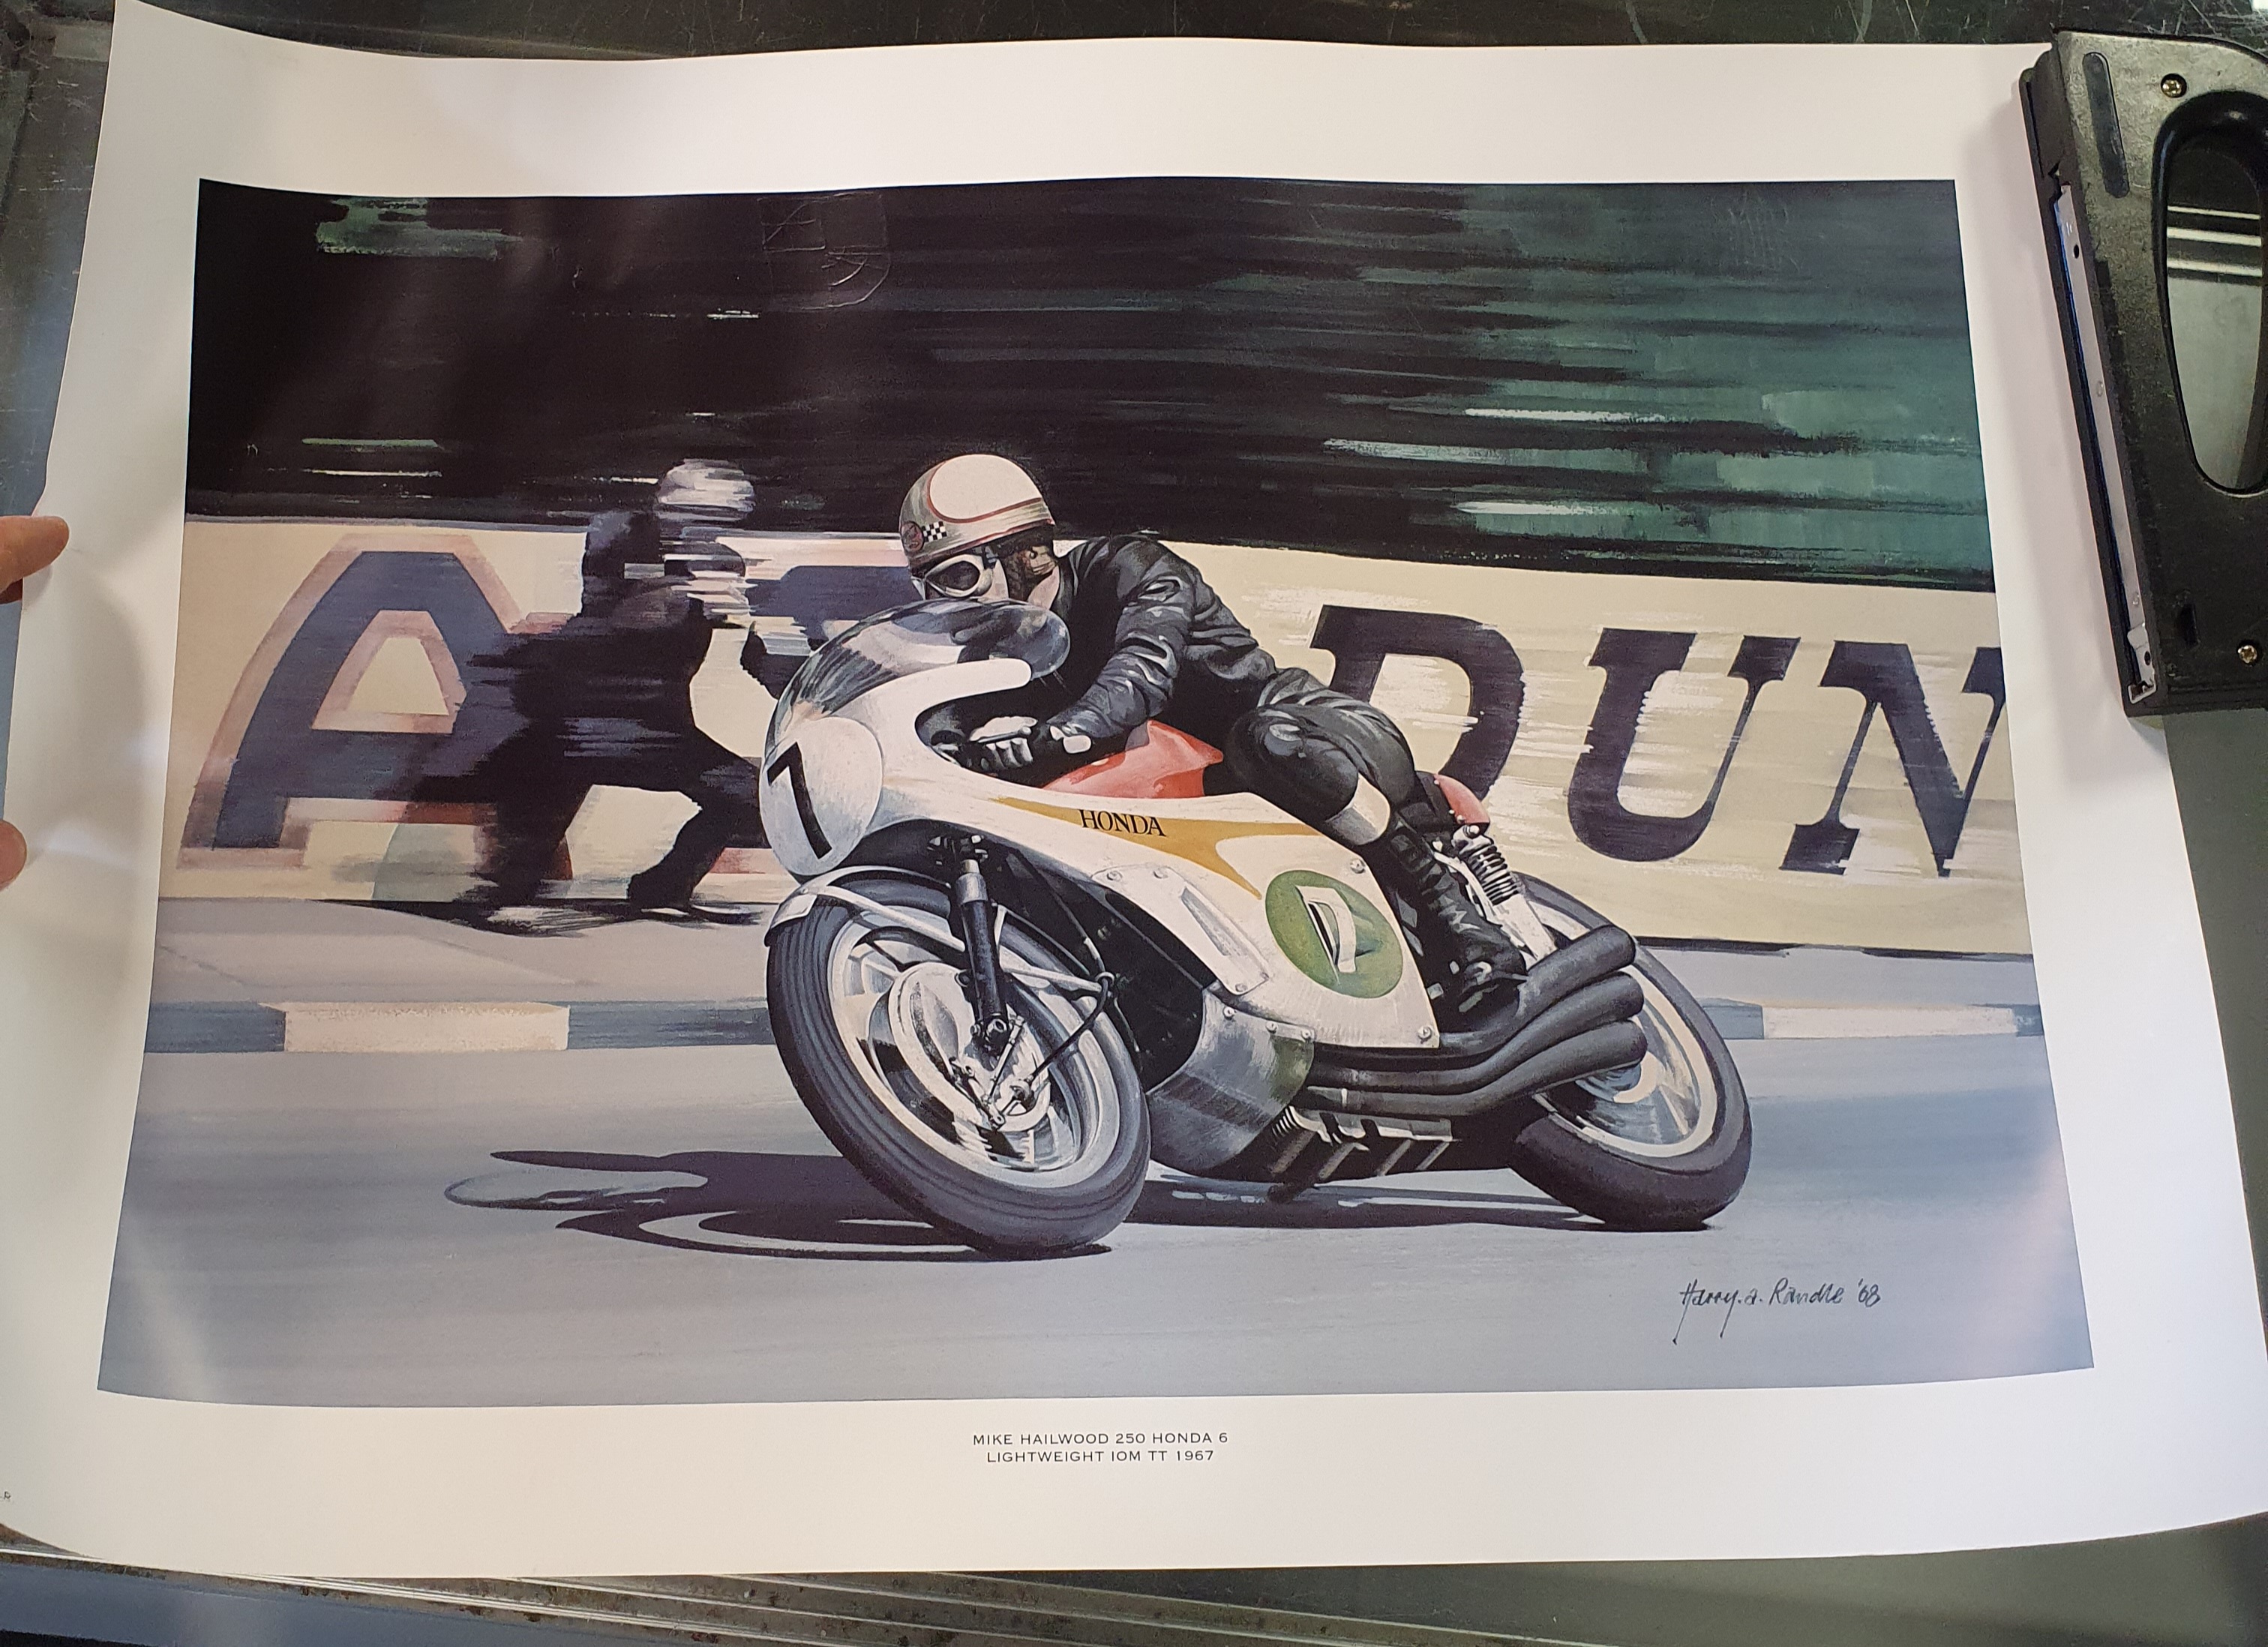 Harry A Randall coloured print, Mike Hailwood, 250 Honda 6 lightweight IOM TT 1967, and other